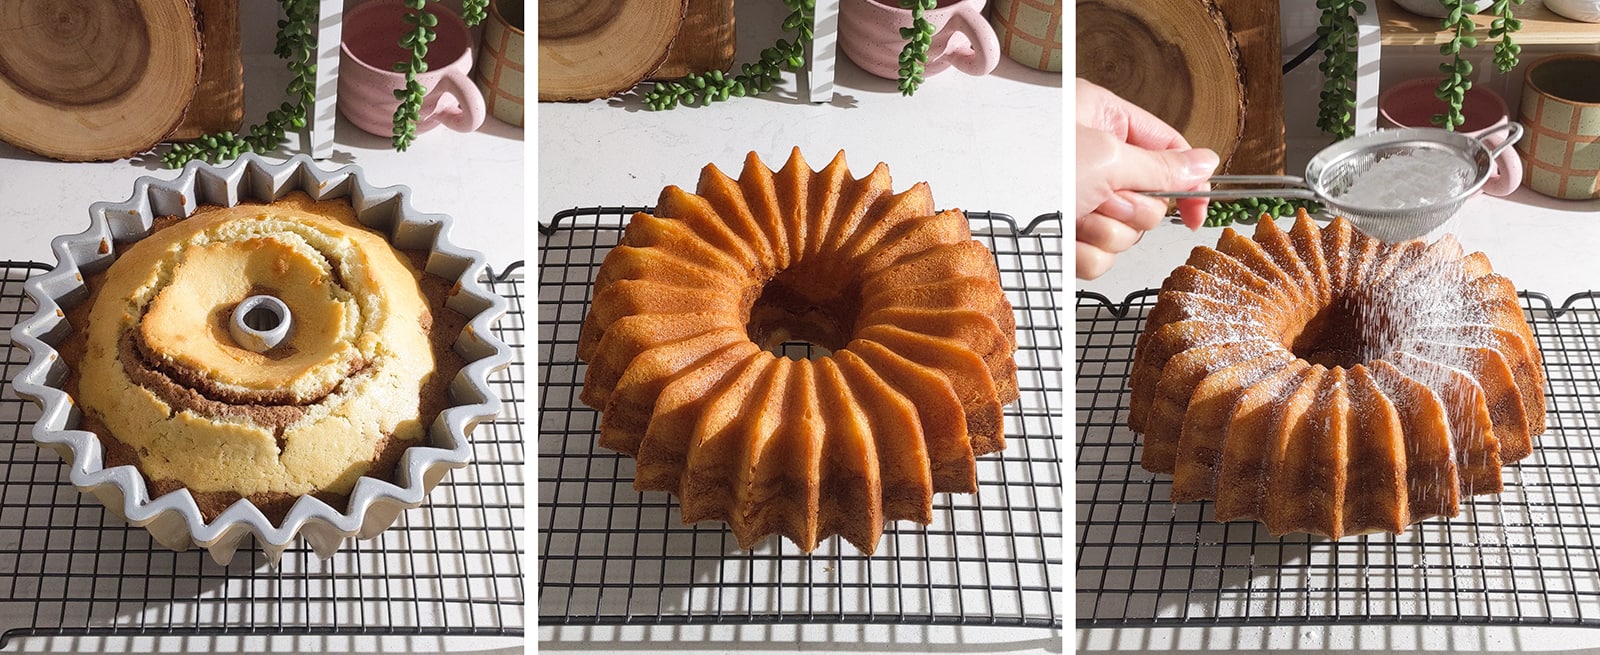 https://teakandthyme.com/wp-content/uploads/2022/10/cinnamon-swirl-bundt-cake-process-4.jpg